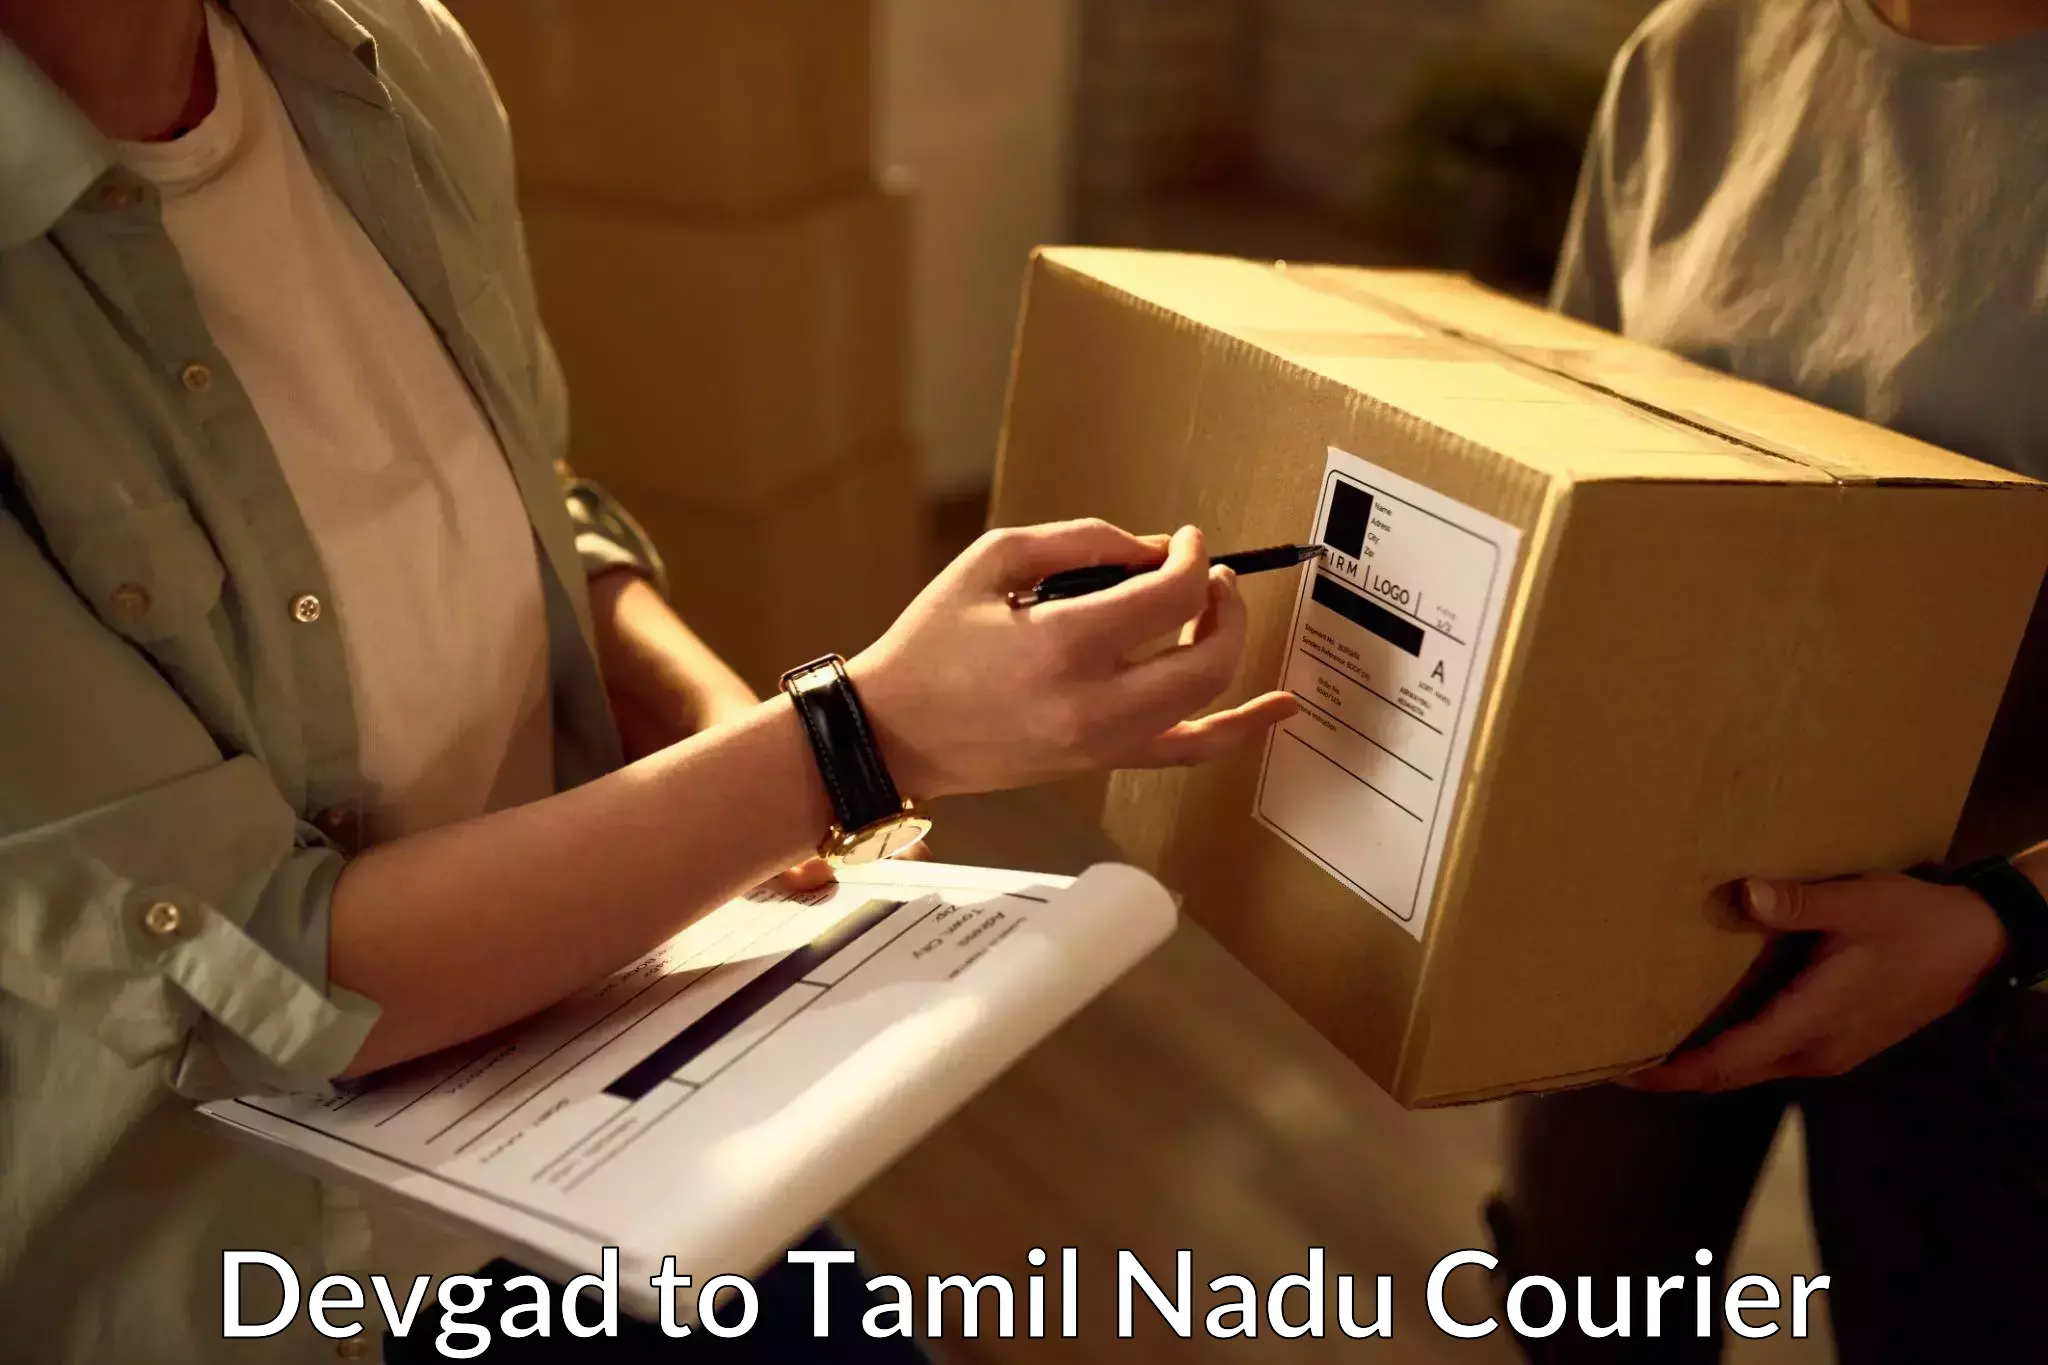 Bulk courier orders Devgad to Vilathikulam